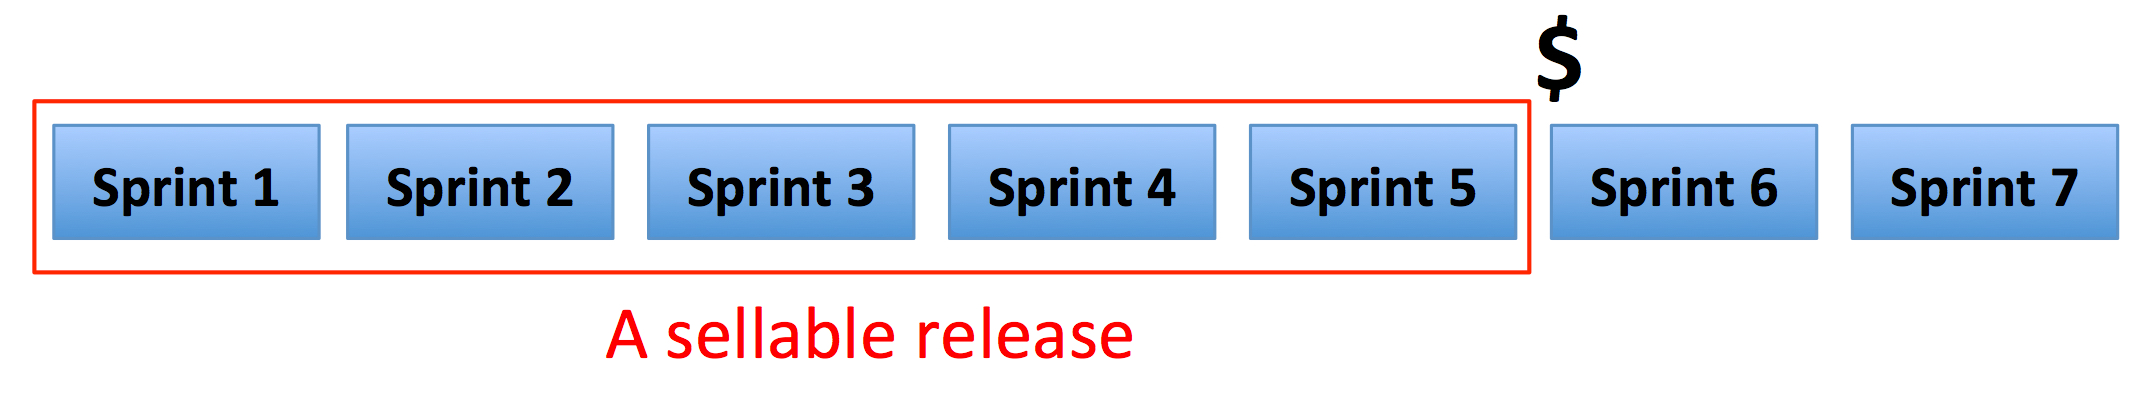 sprint-release2